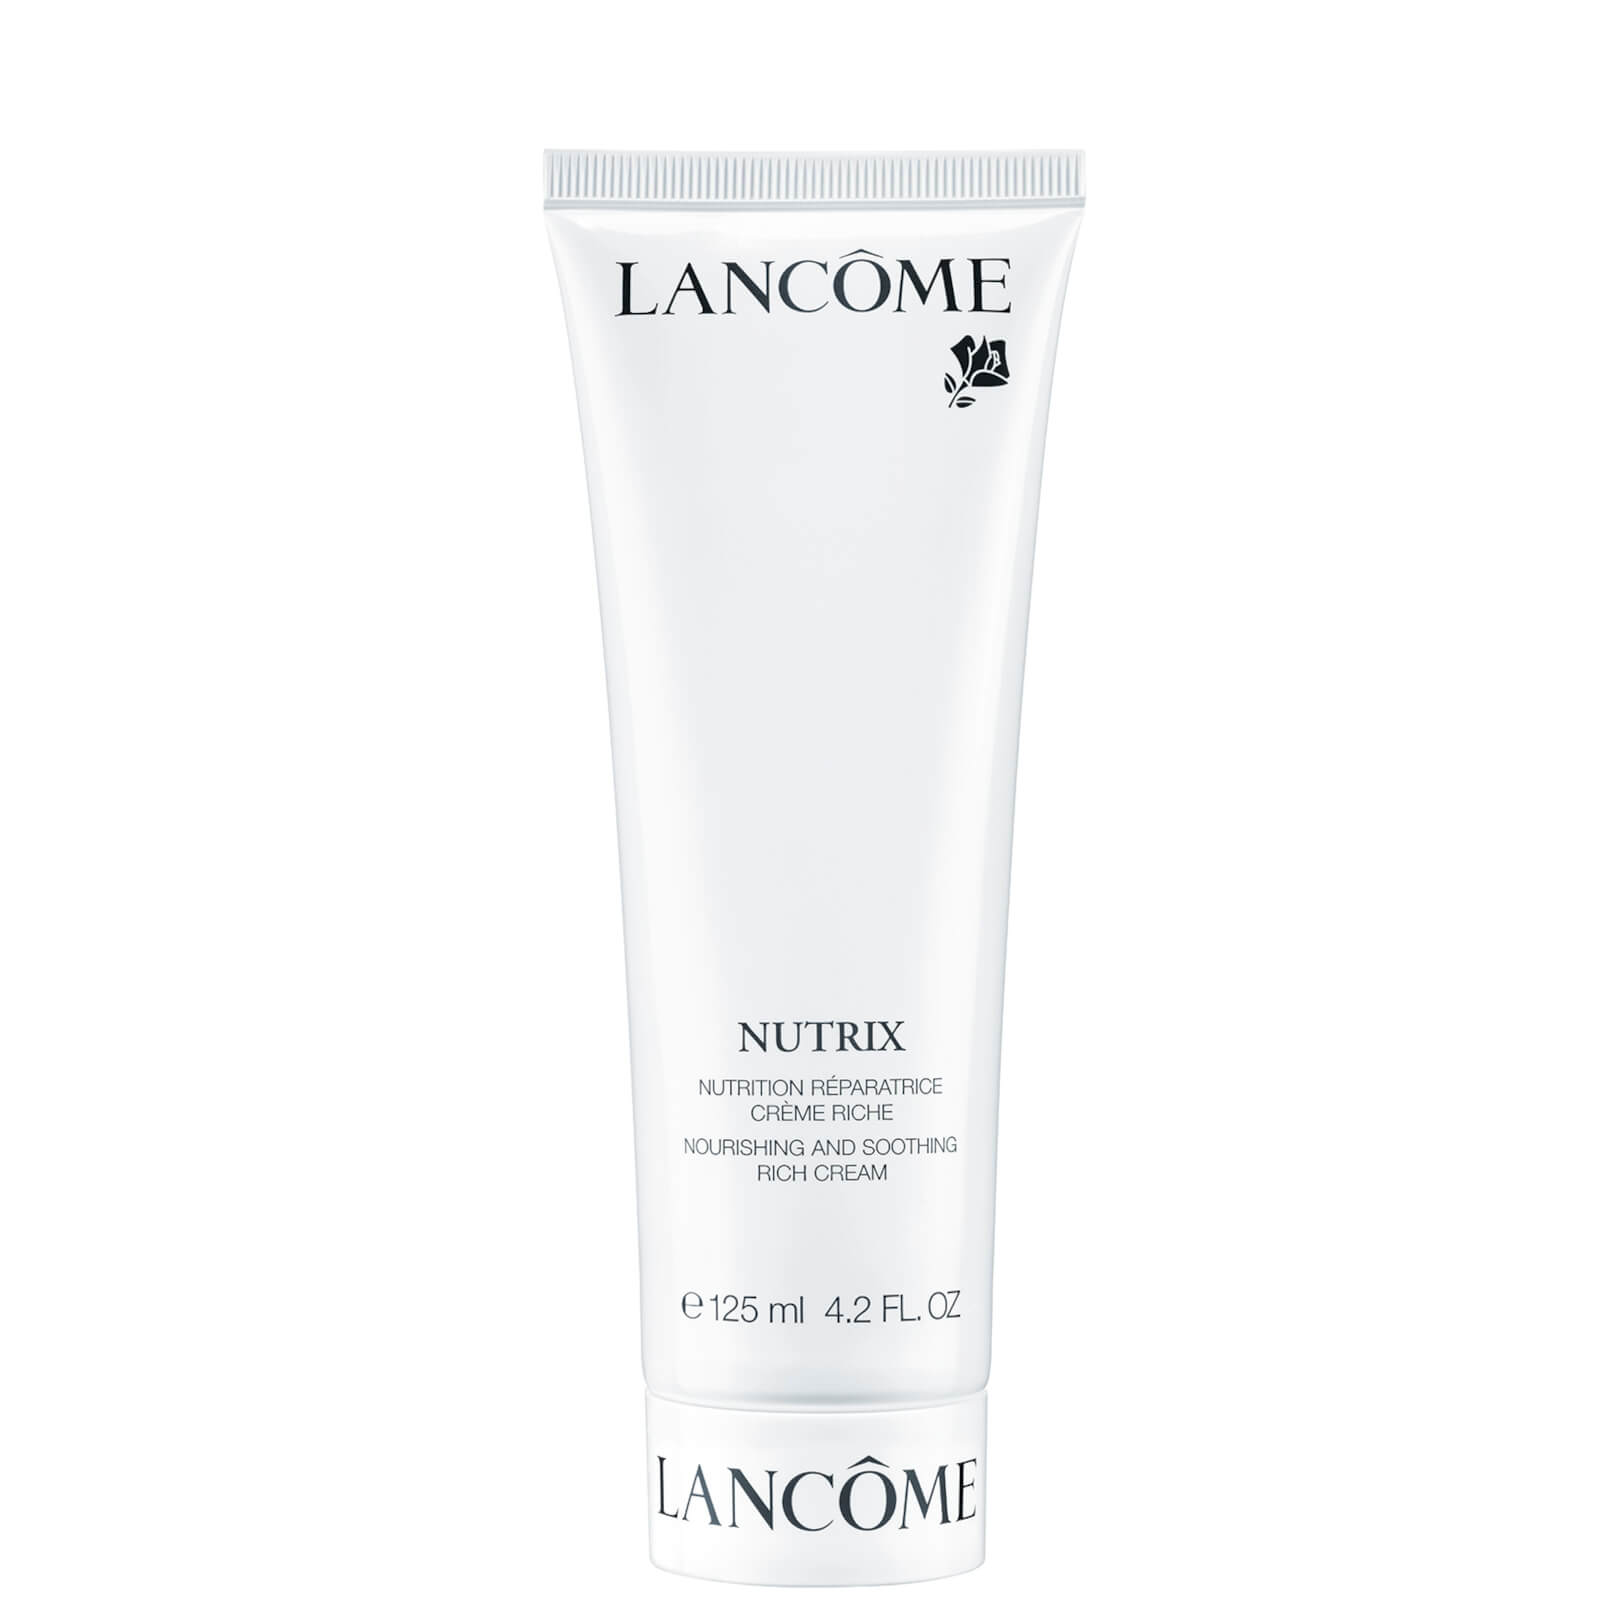 Lancome Nutrix Face Cream 125ml